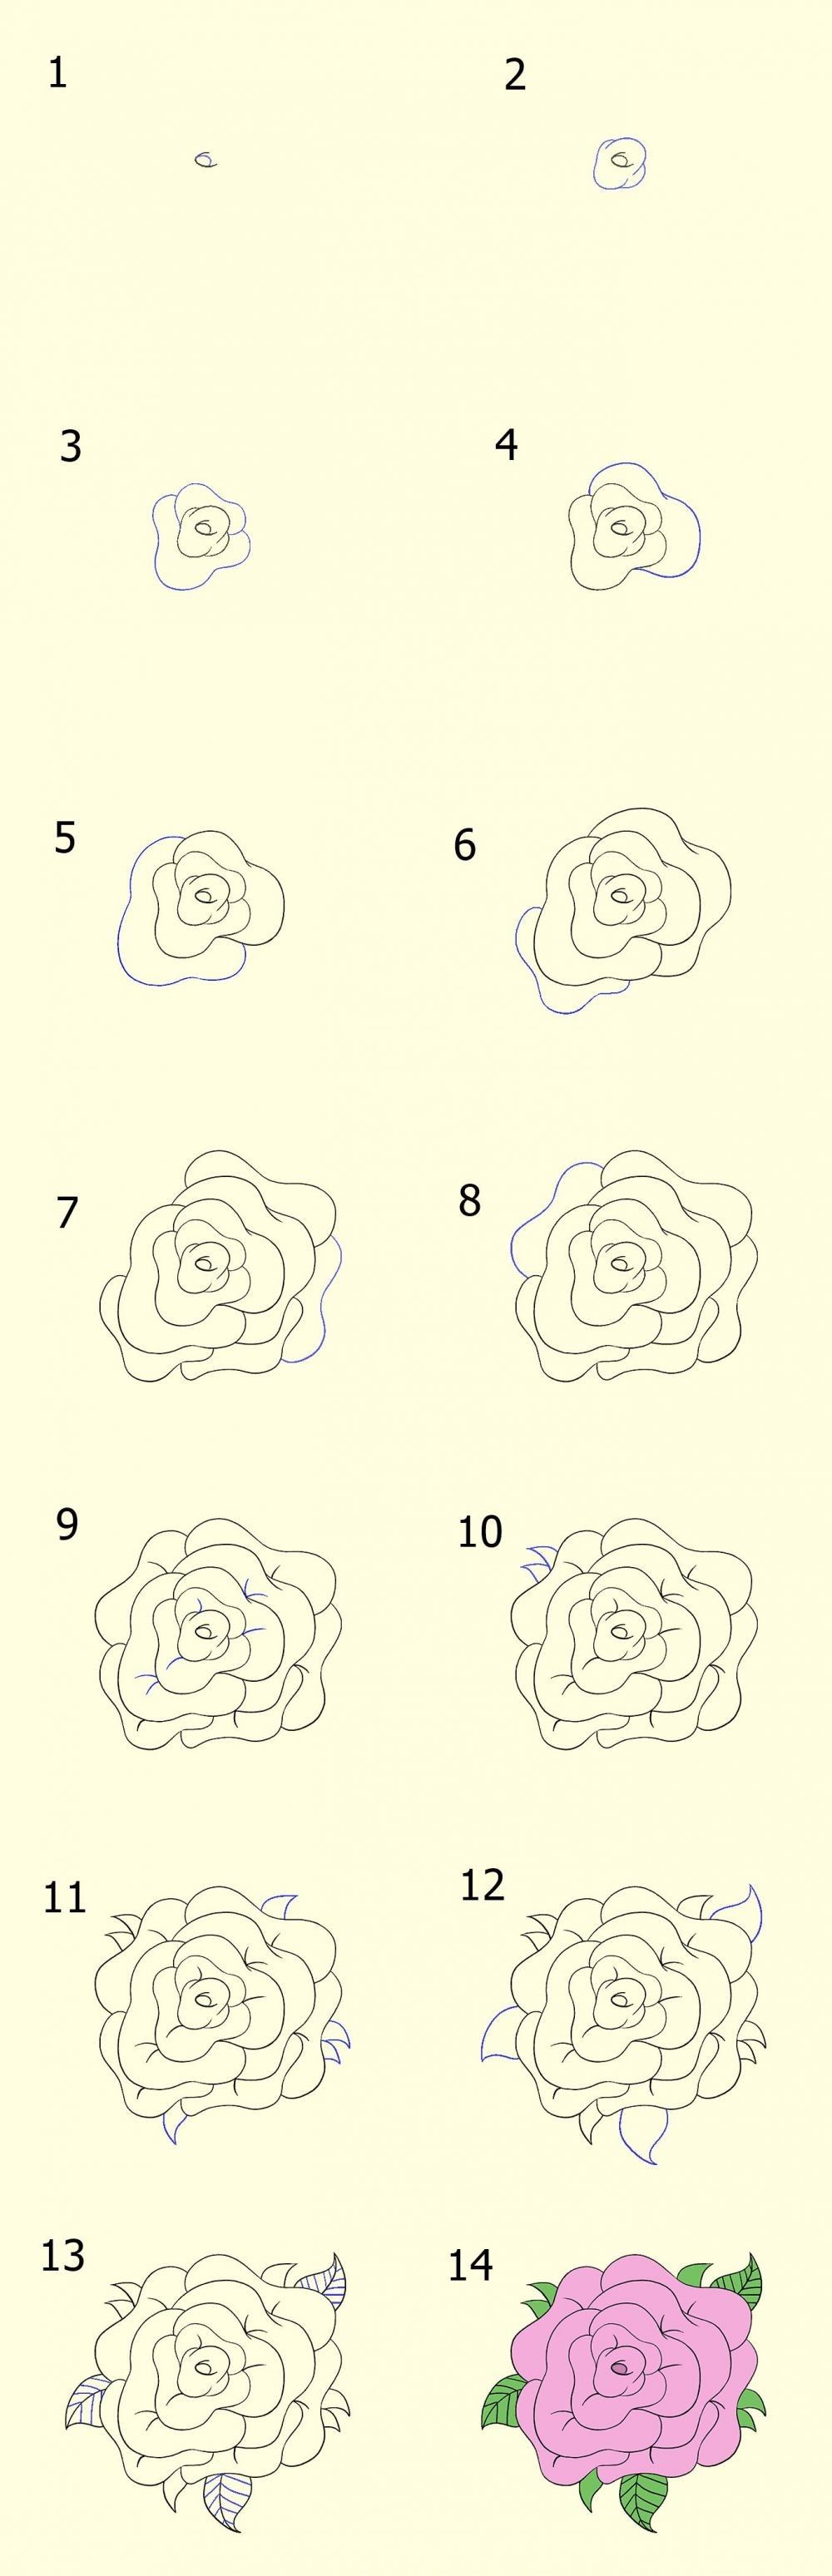 3 Cara Mudah Menggambar Sketsa Bunga Yang Indah